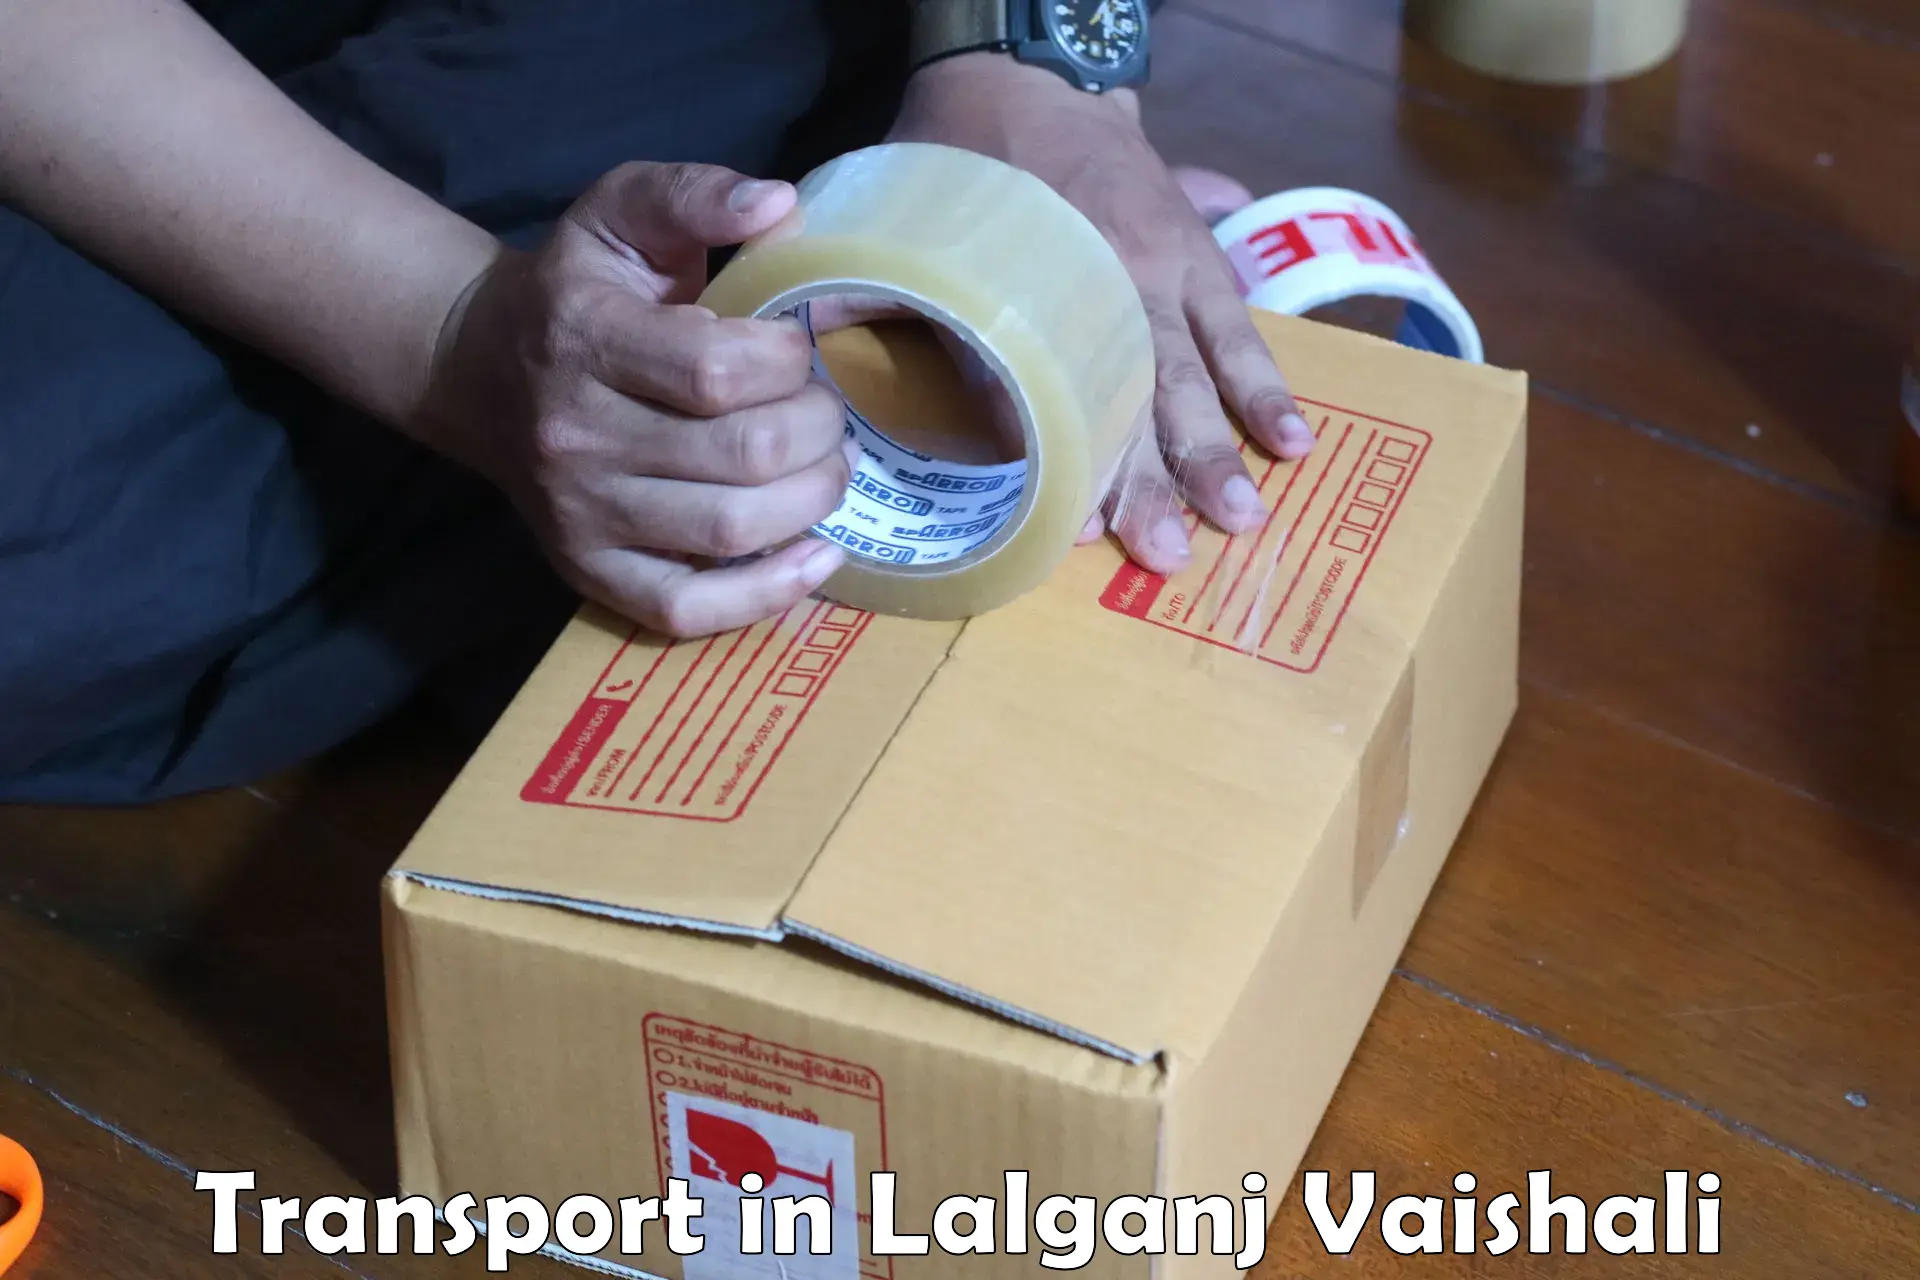 Intercity goods transport in Lalganj Vaishali